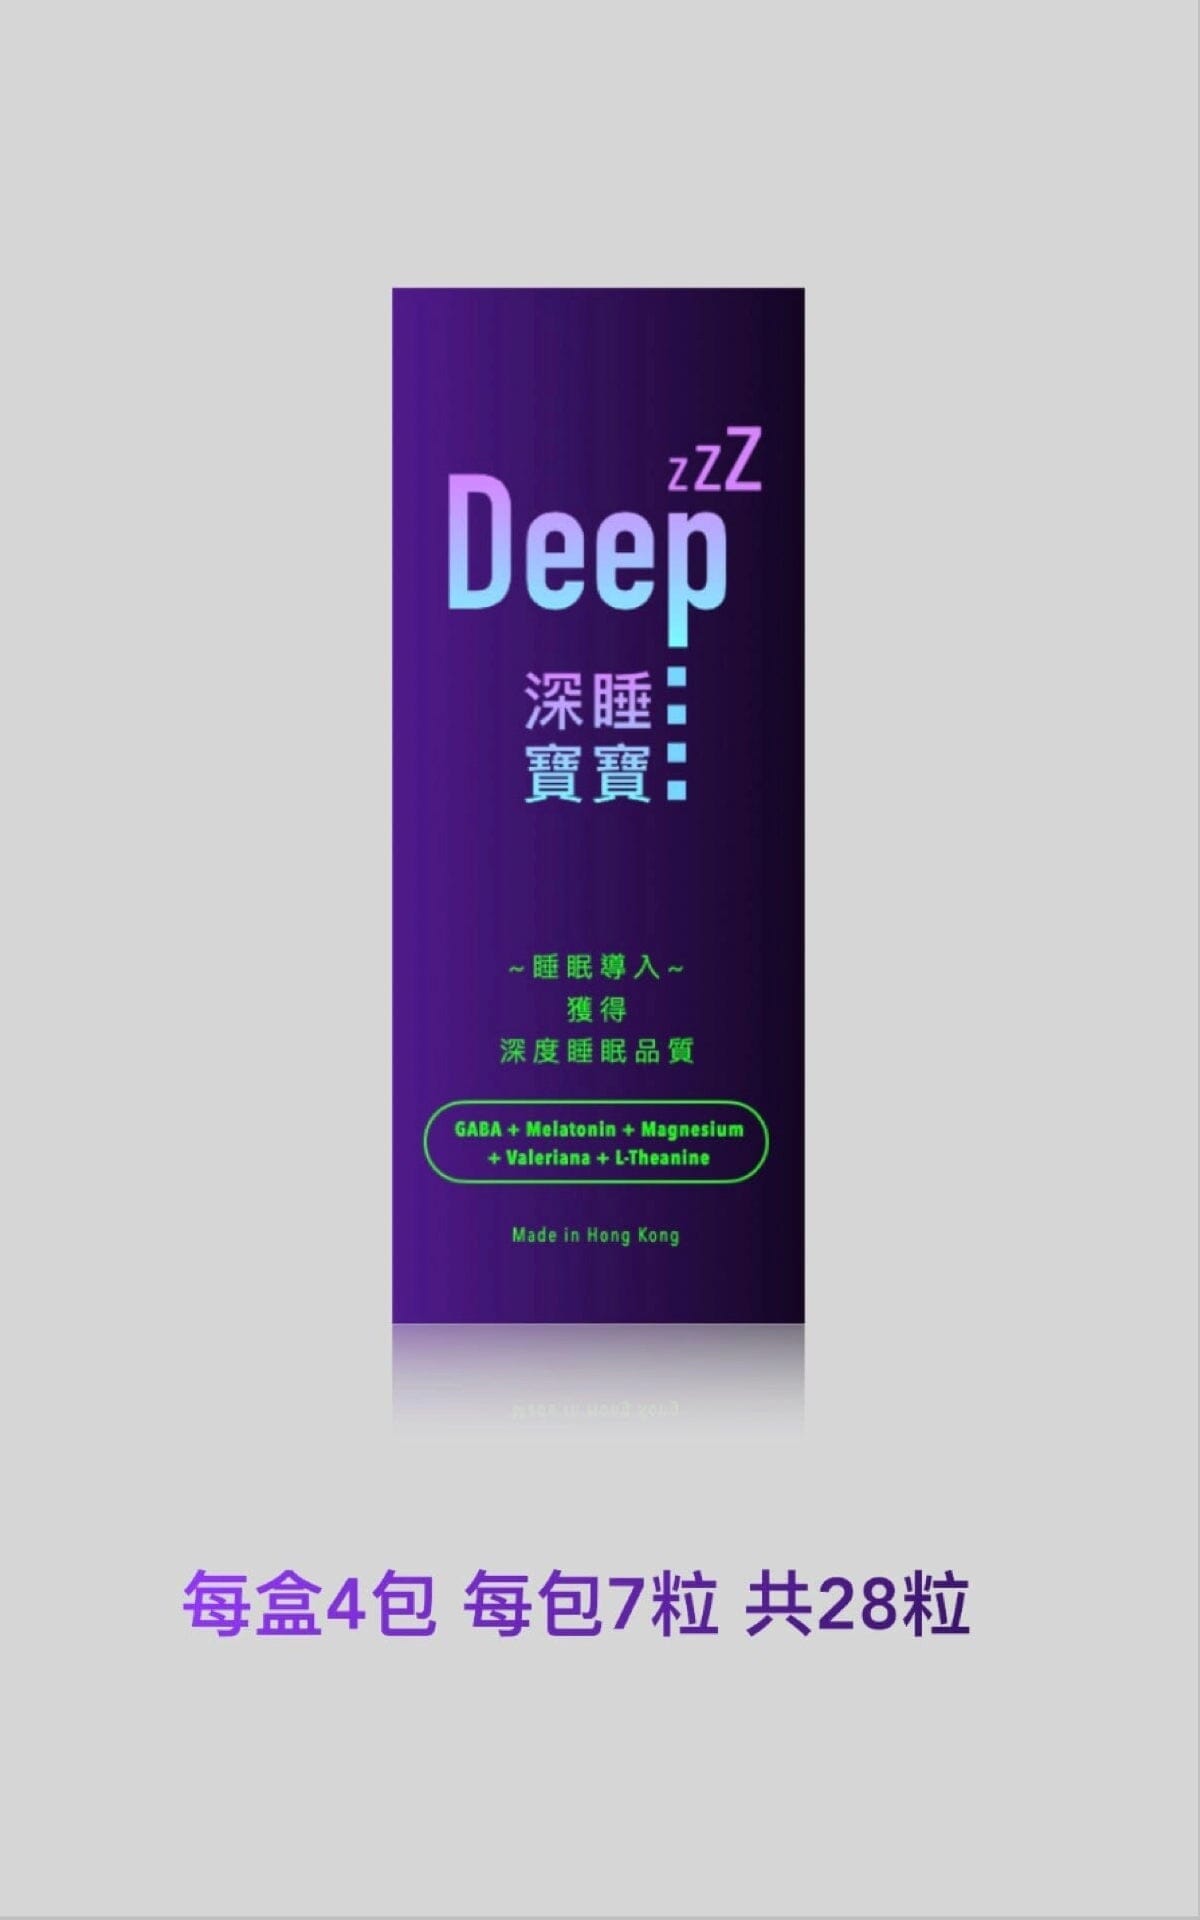 DEEPZZZ 深睡寶寶 💤 導入深睡養生 您不再失眠 💤 Functional Foods Deepzzz 1盒28粒 原價: $490 